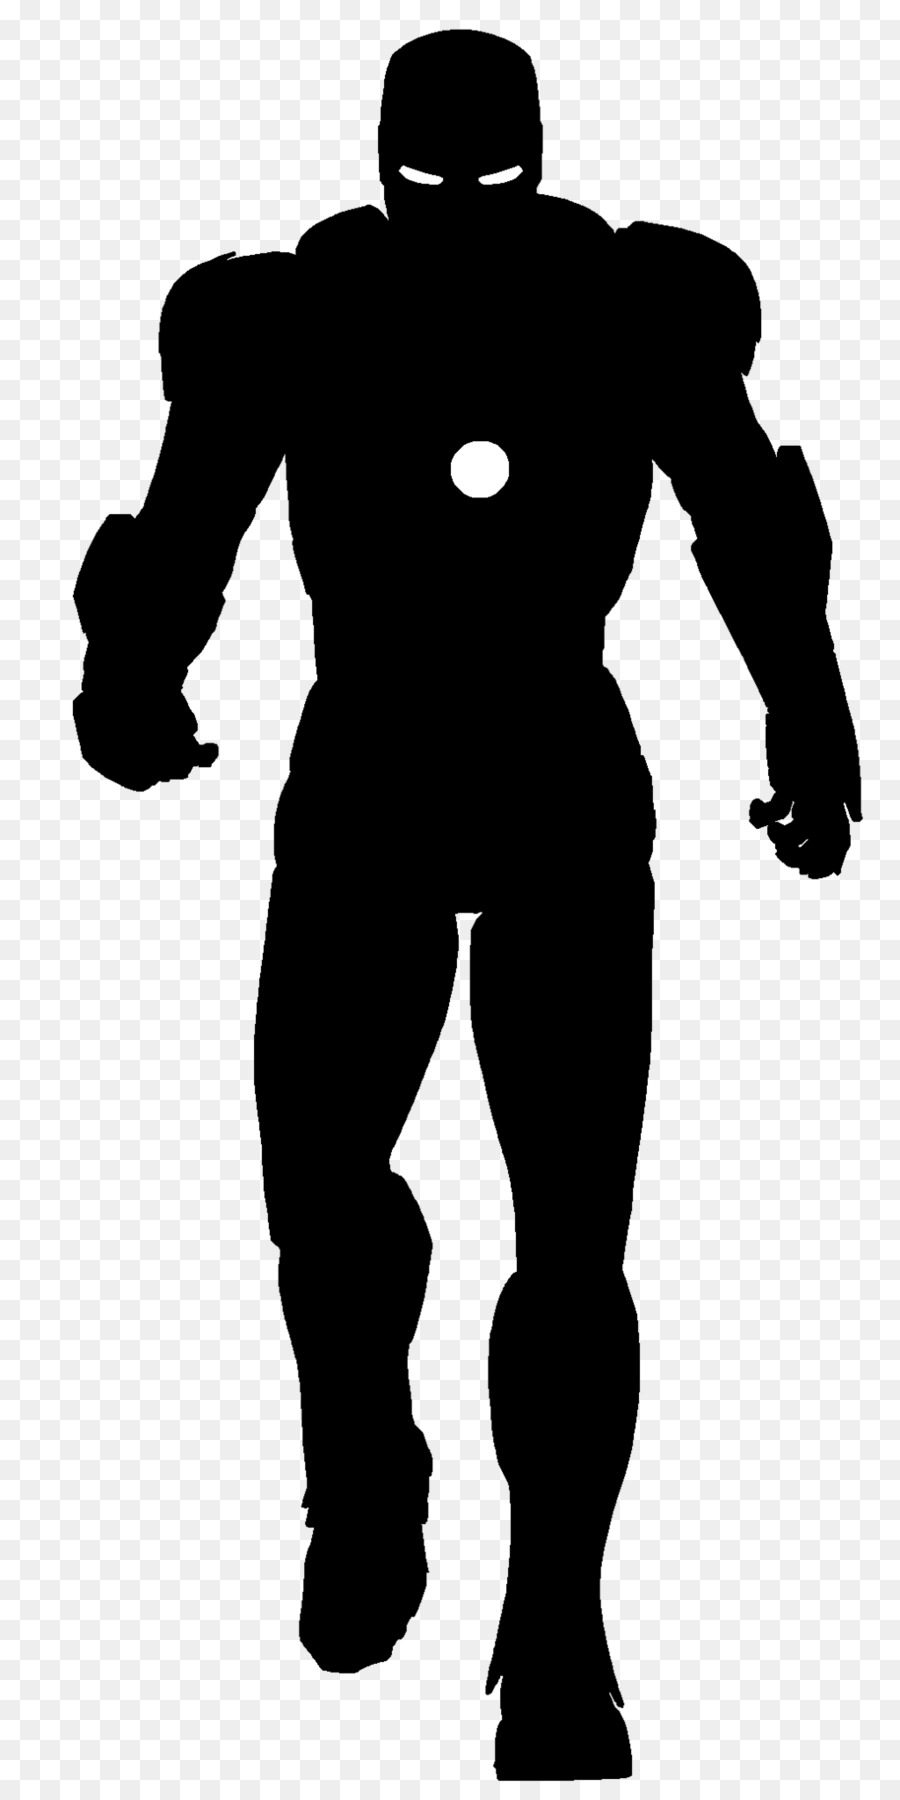 Iron Man Silhouette Superhero - man silhouette png download - 1024*2032 - Free Transparent Iron Man png Download.